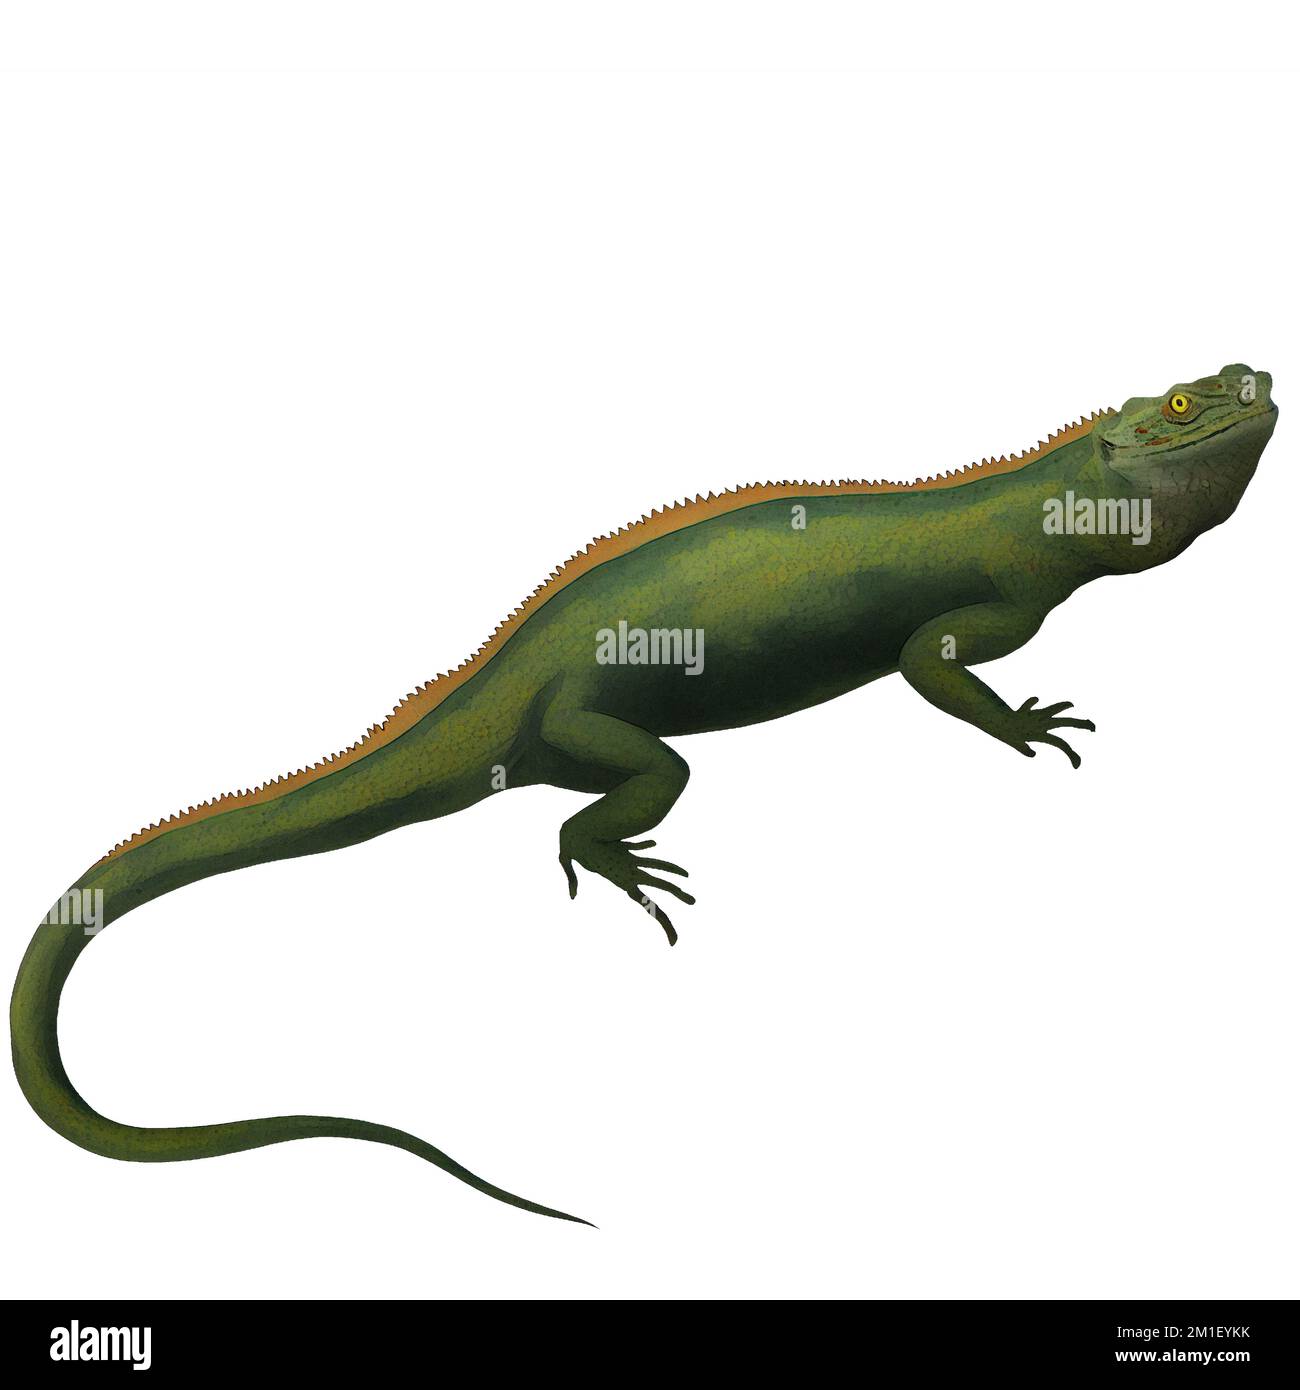 https://c8.alamy.com/comp/2M1EYKK/green-lizard-3-reptiles-digital-art-by-winters860-isolated-transparent-background-2M1EYKK.jpg